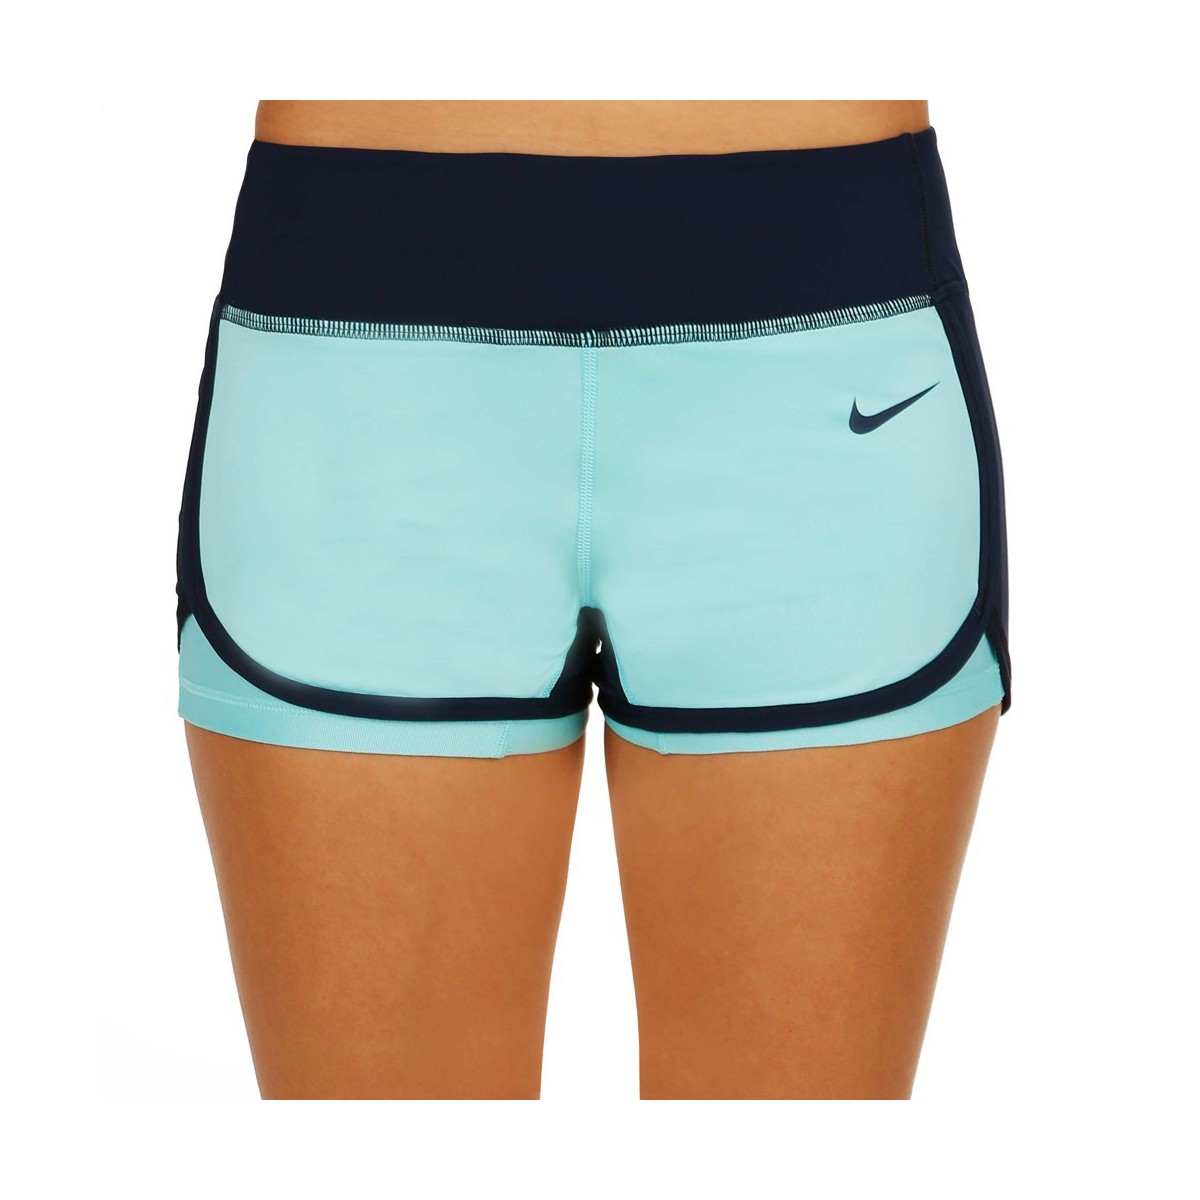 Short Nike court été 2015 turquoise - bleu marine